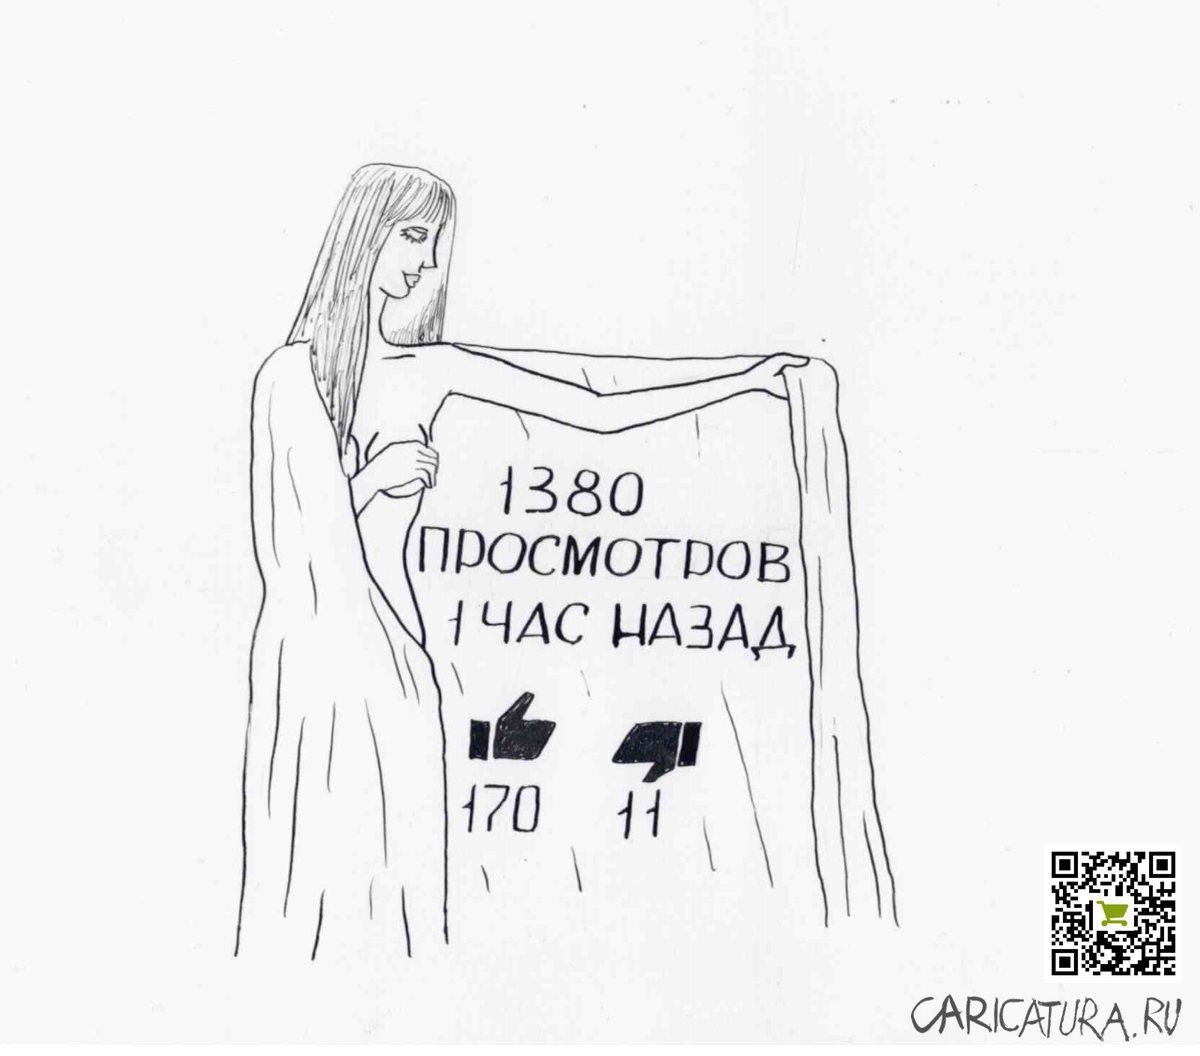 Карикатура "Женщина с покрывалом", Александр Петров